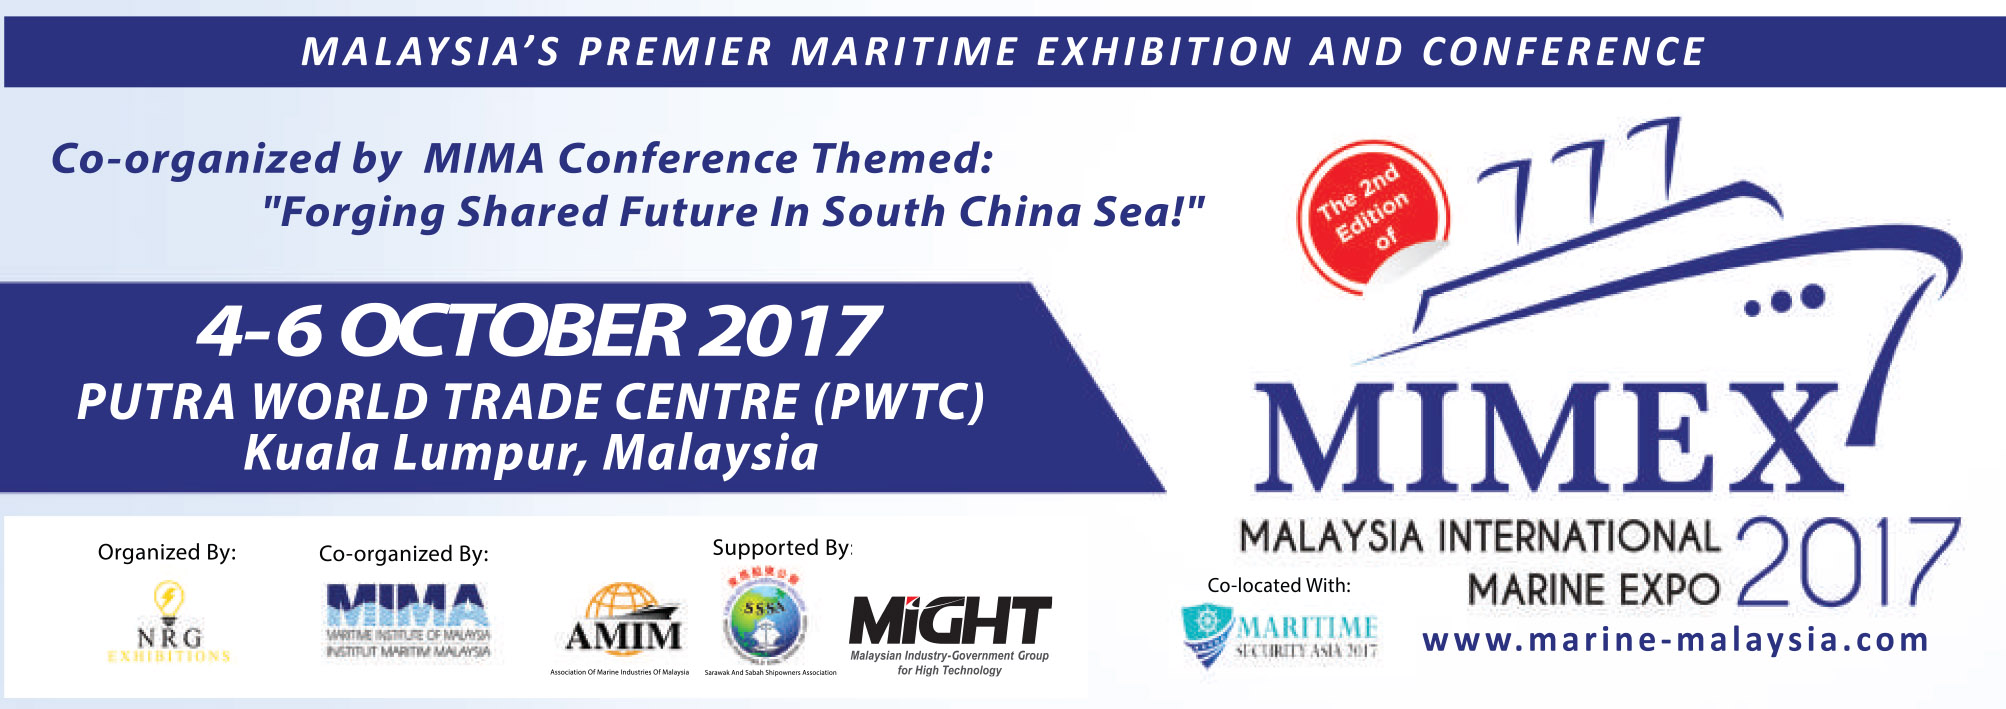 Malaysia International Marine Expo 2017 (MIMEX), Wilayah Persekutuan, Kuala Lumpur, Malaysia